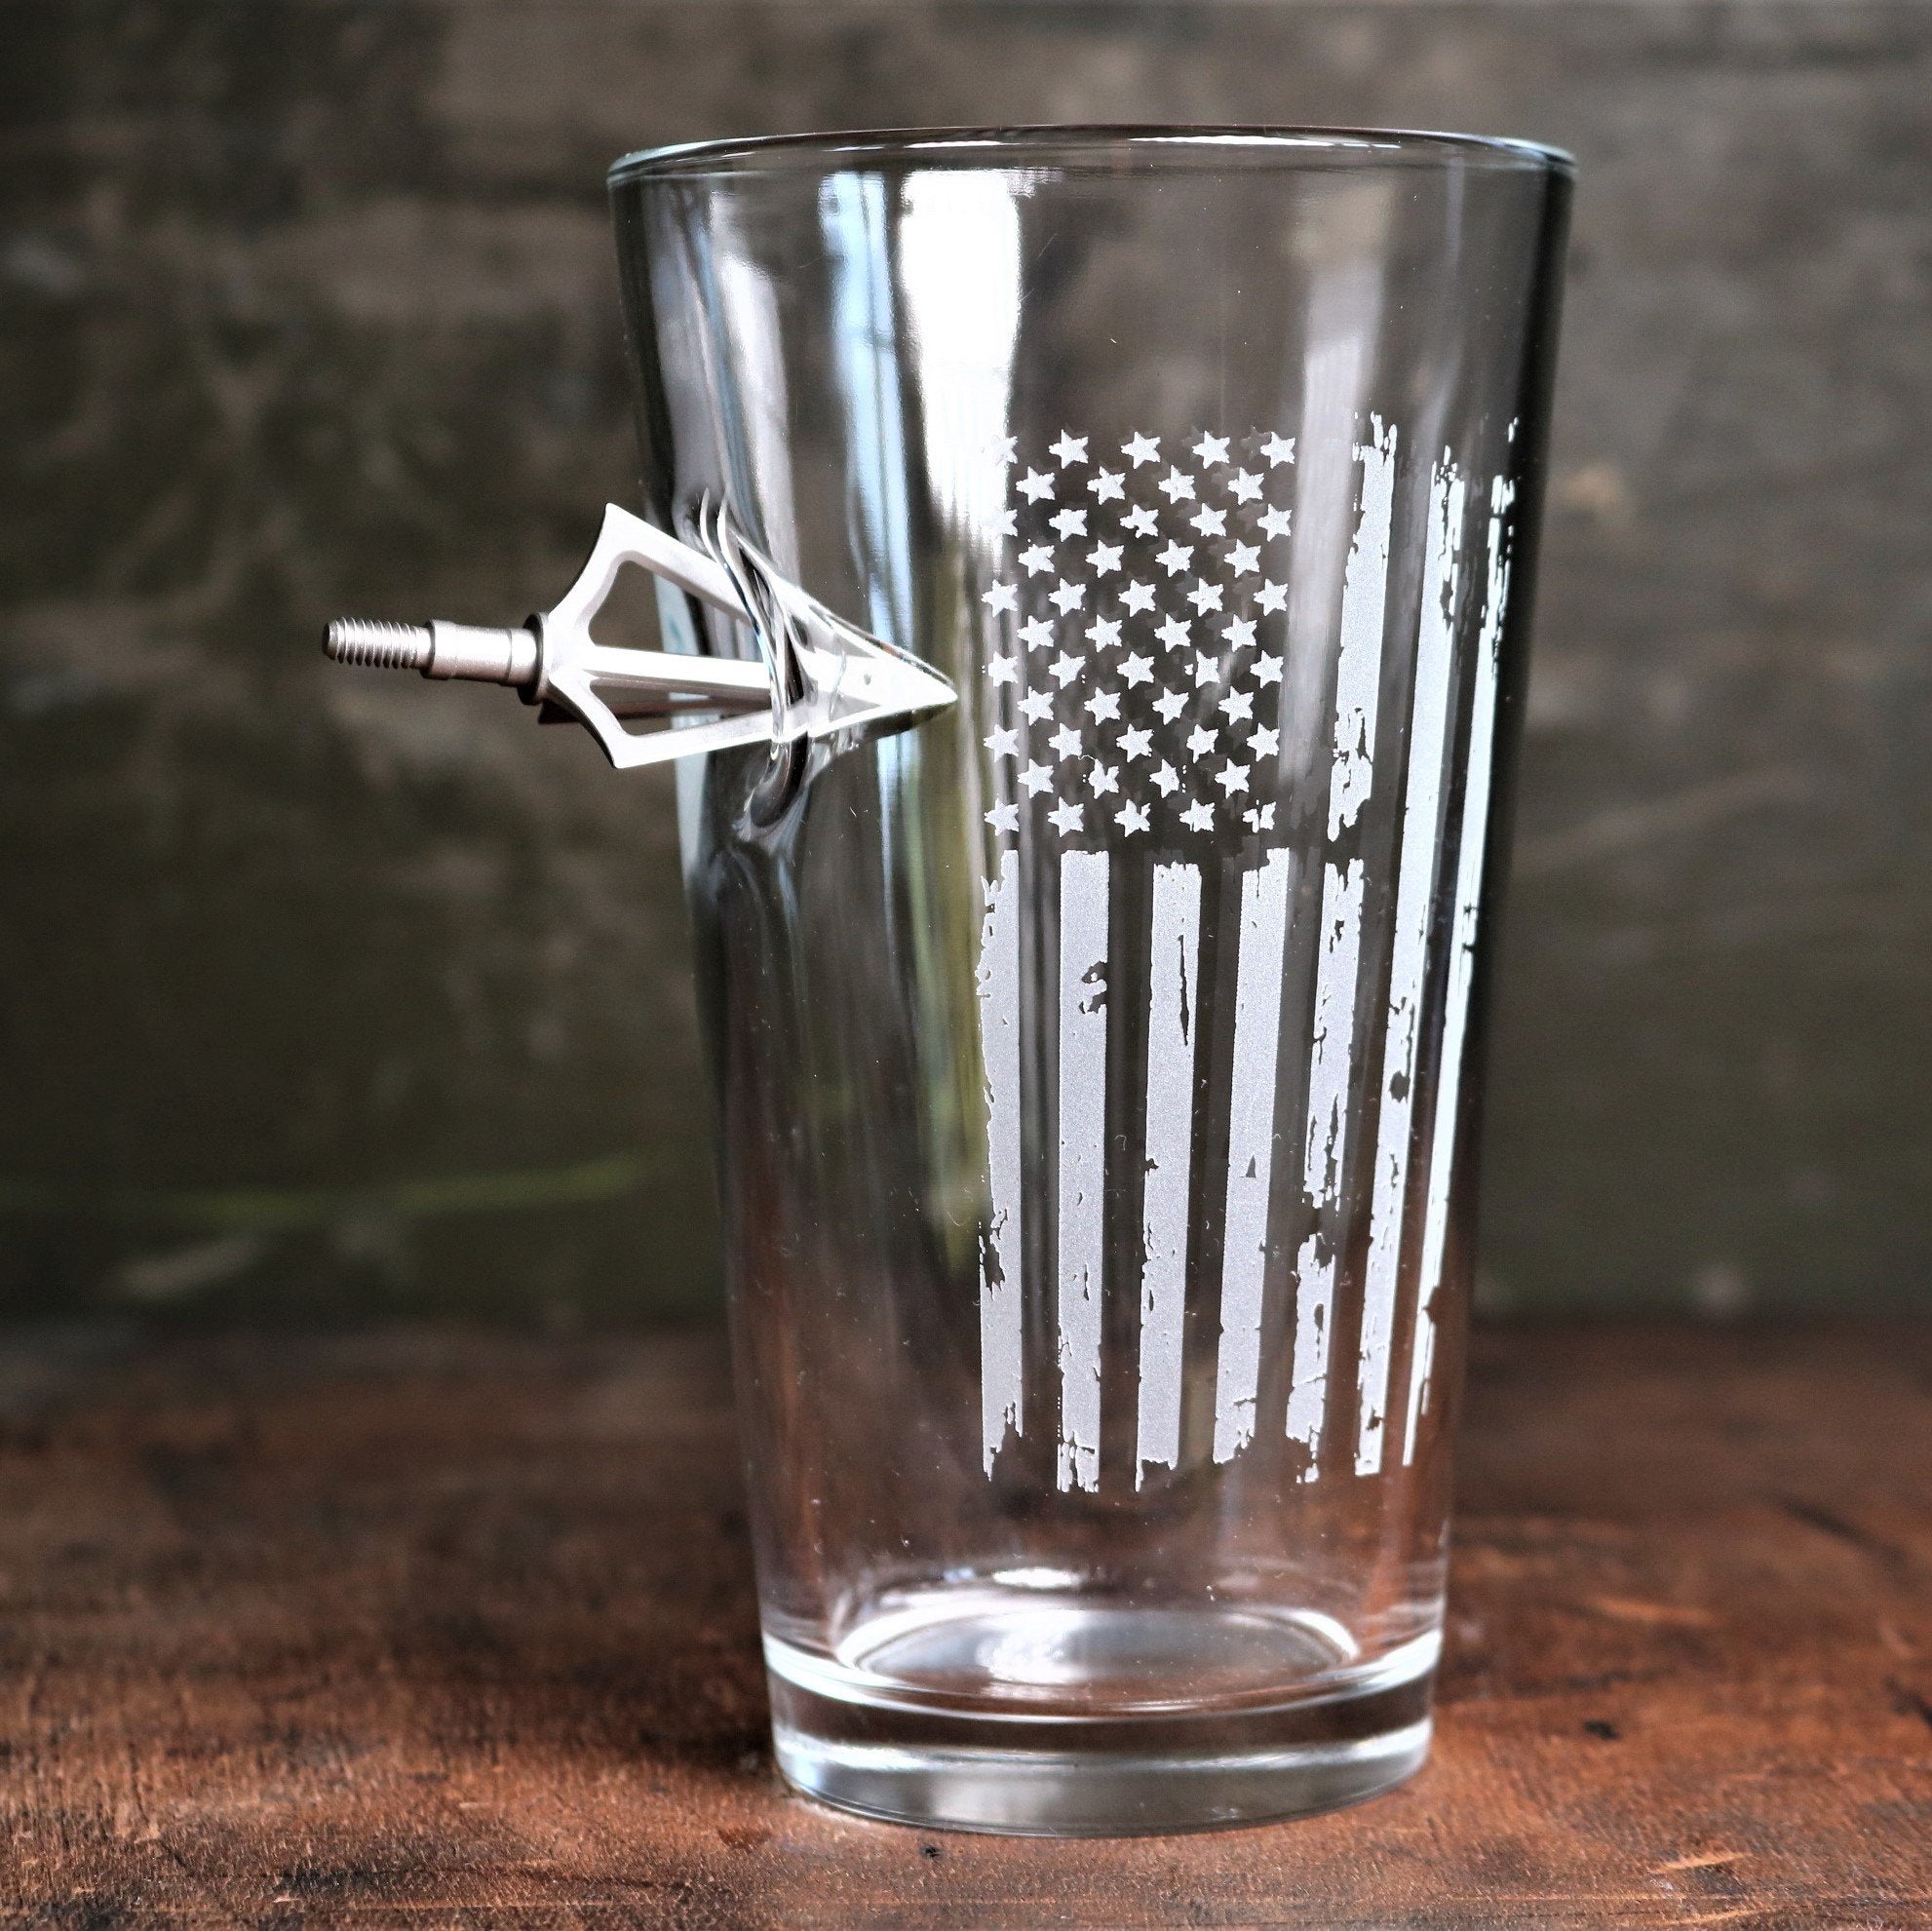 BenShot Patriotic Broadhead Pint Glass